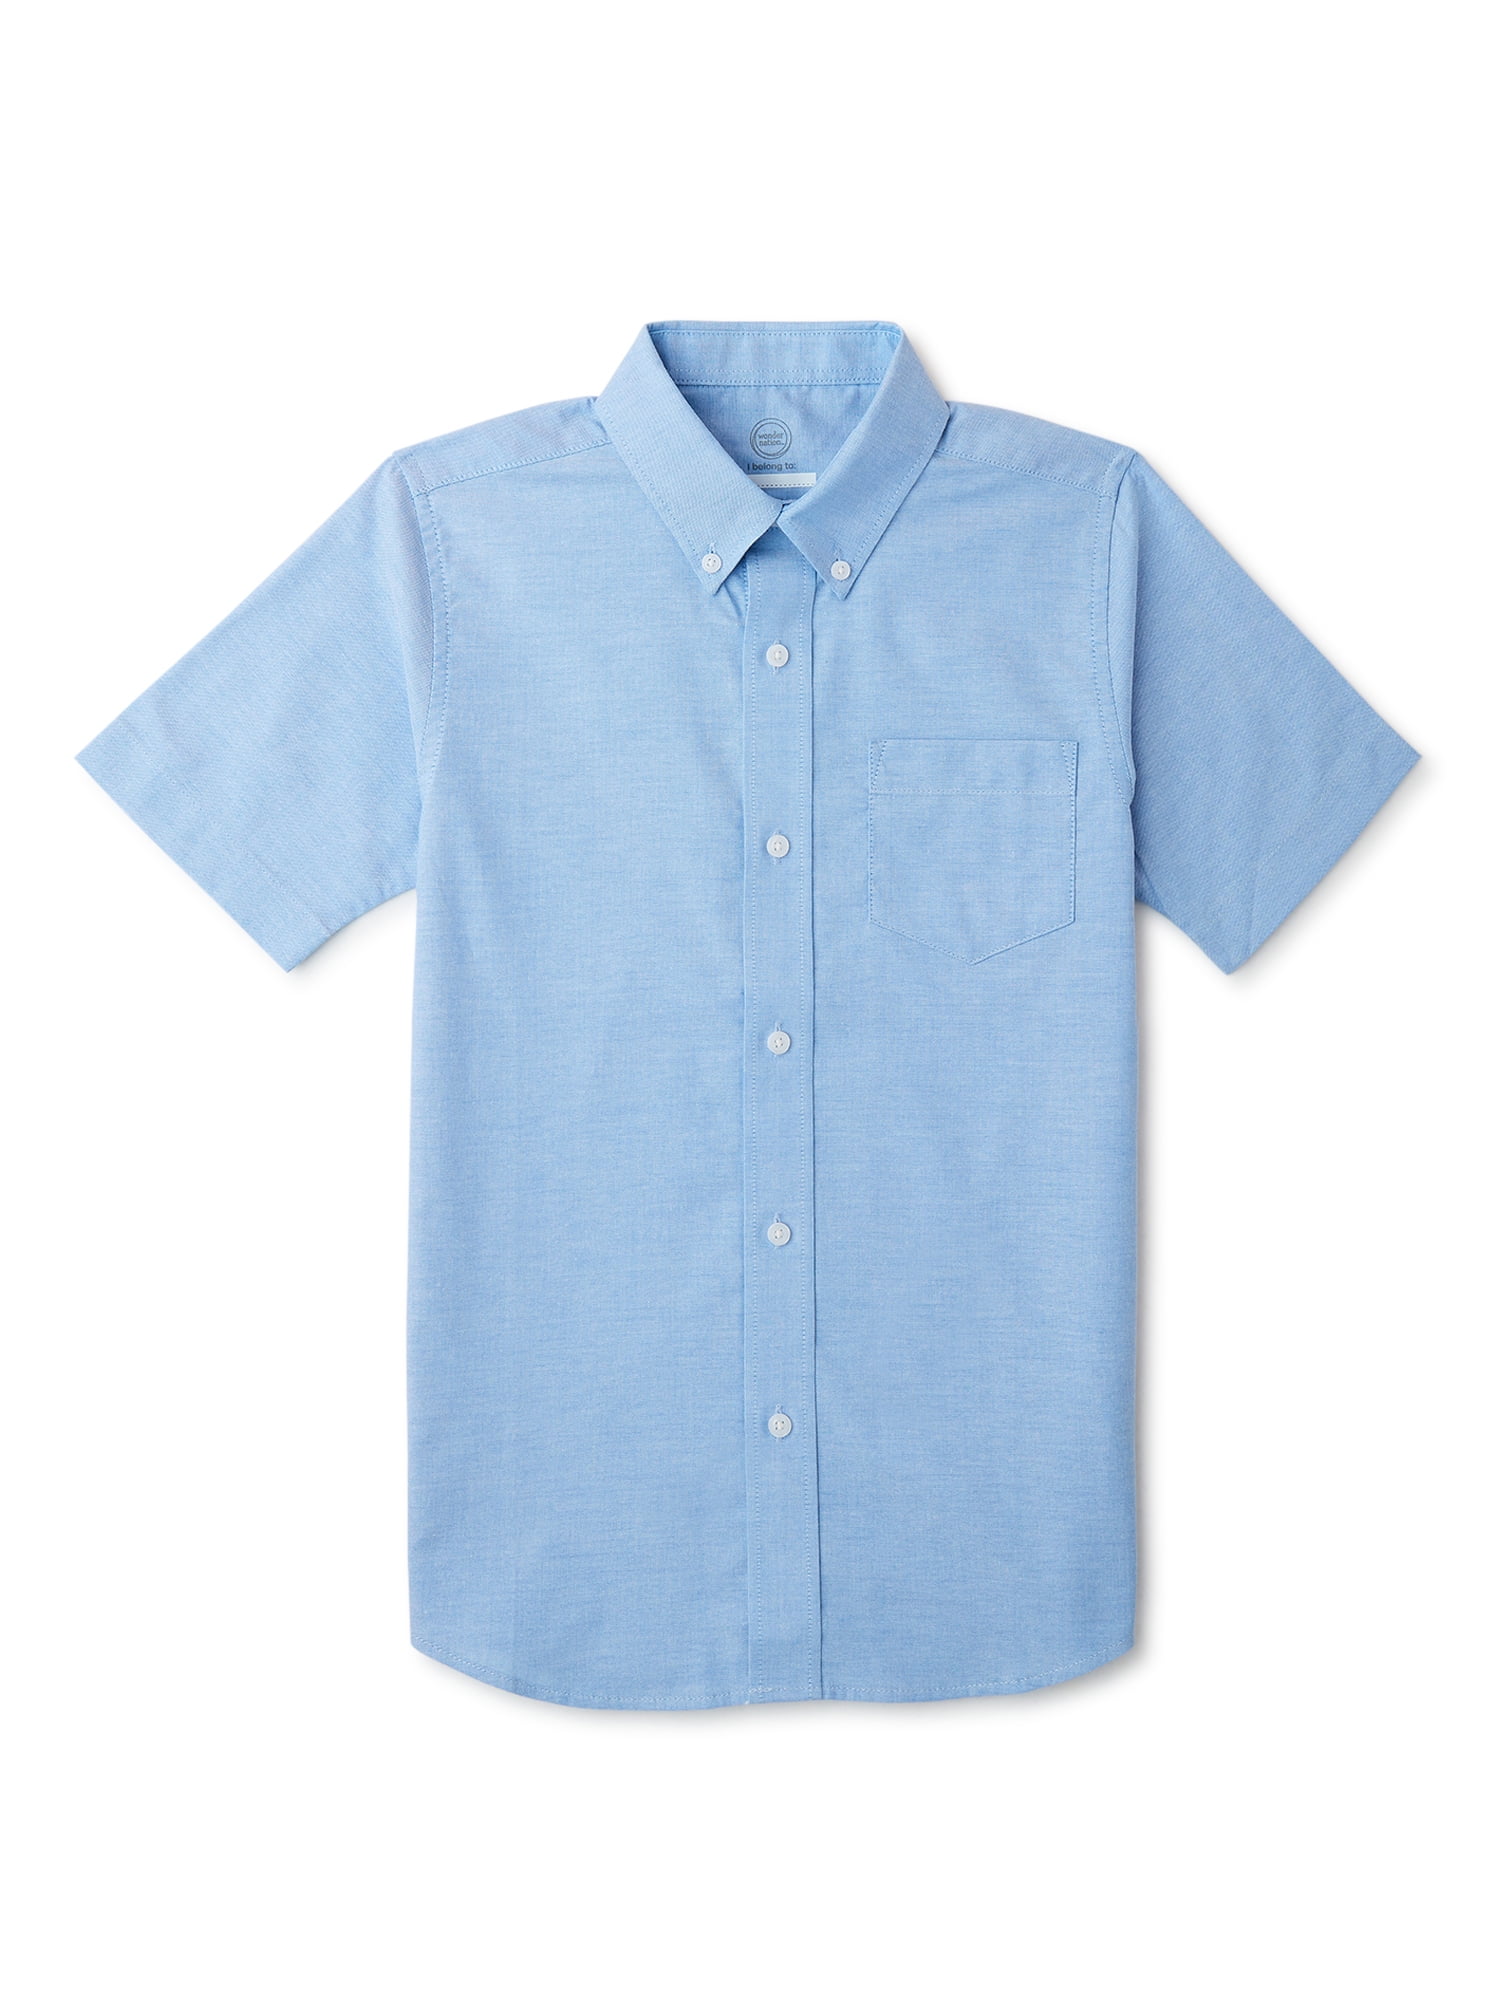 Ziggys School Shirts Blue Easy Care Non-Iron Short Sleeve CLEARANCE 